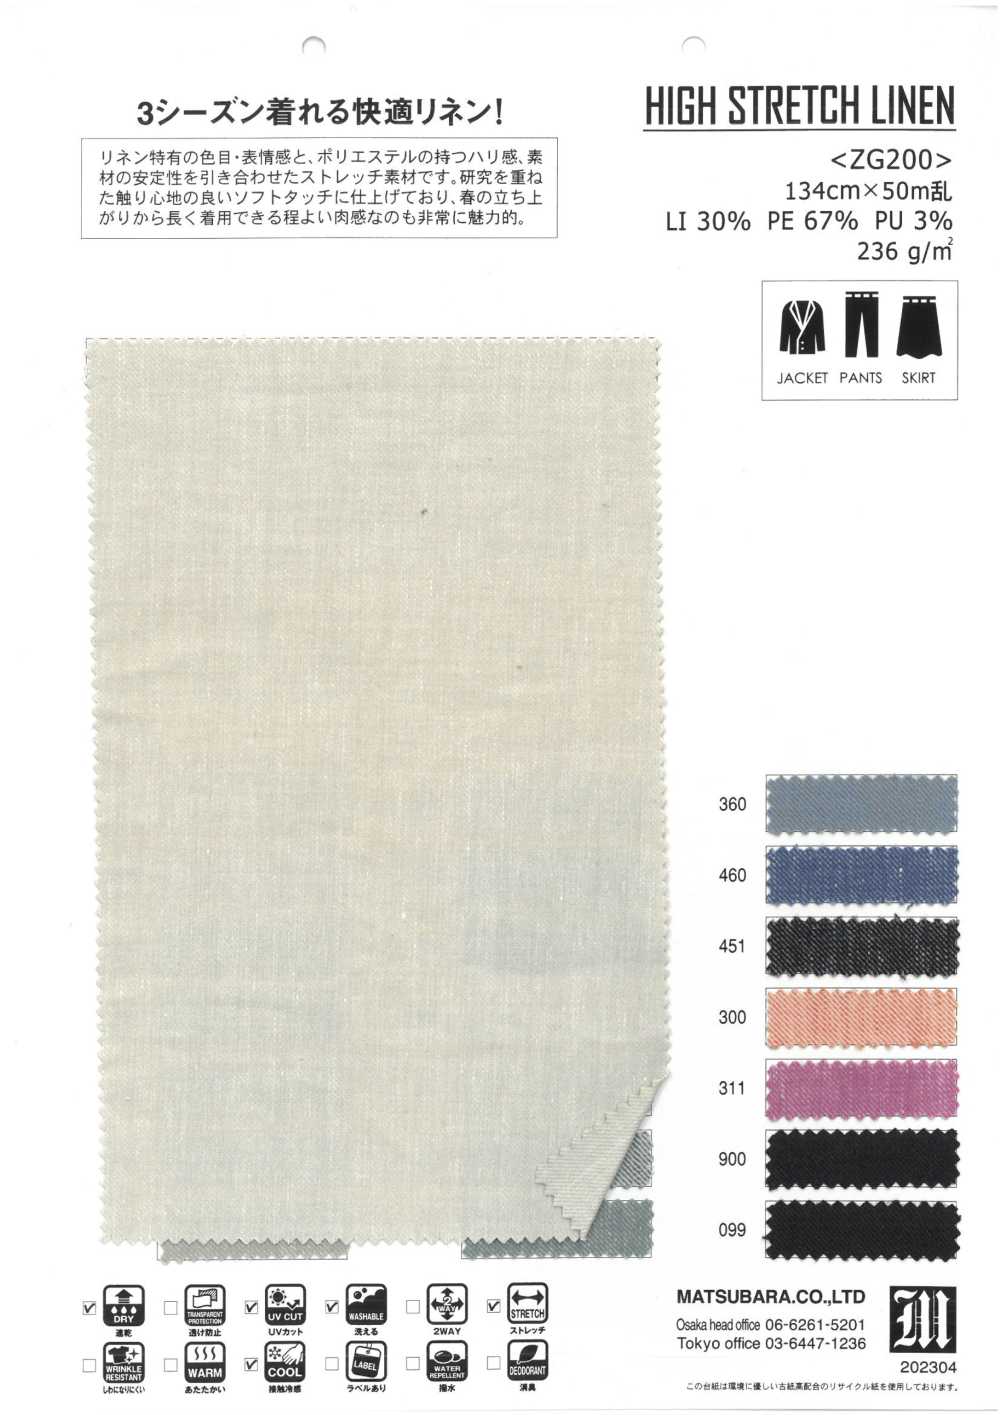 ZG200 HIGH STRETCH LINEN[Textile / Fabric] Matsubara